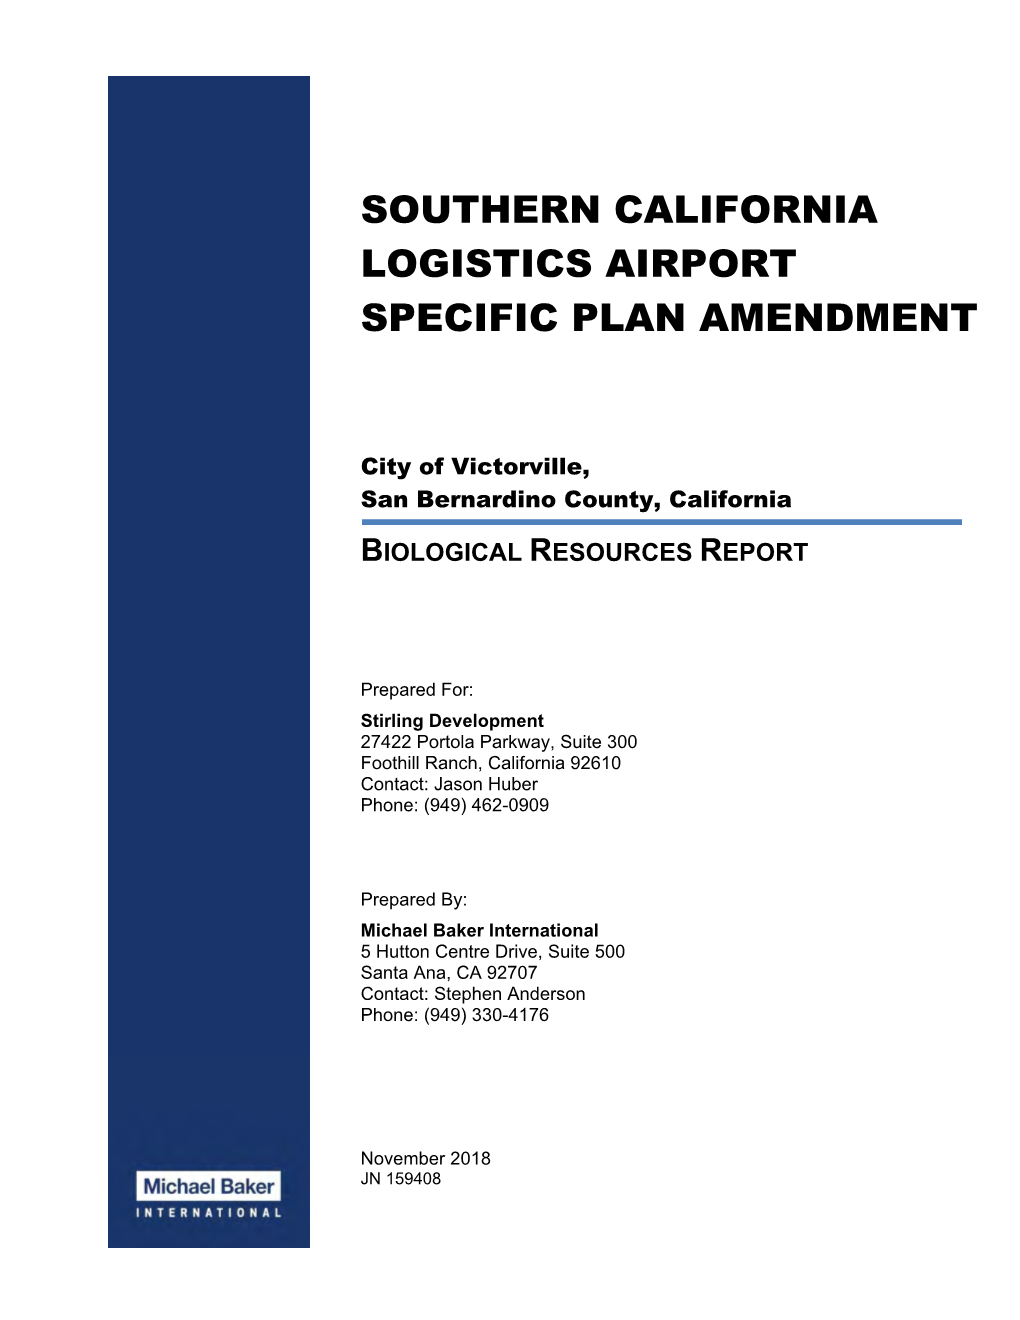 Southern California Logistics Airport Specific Plan Amendment